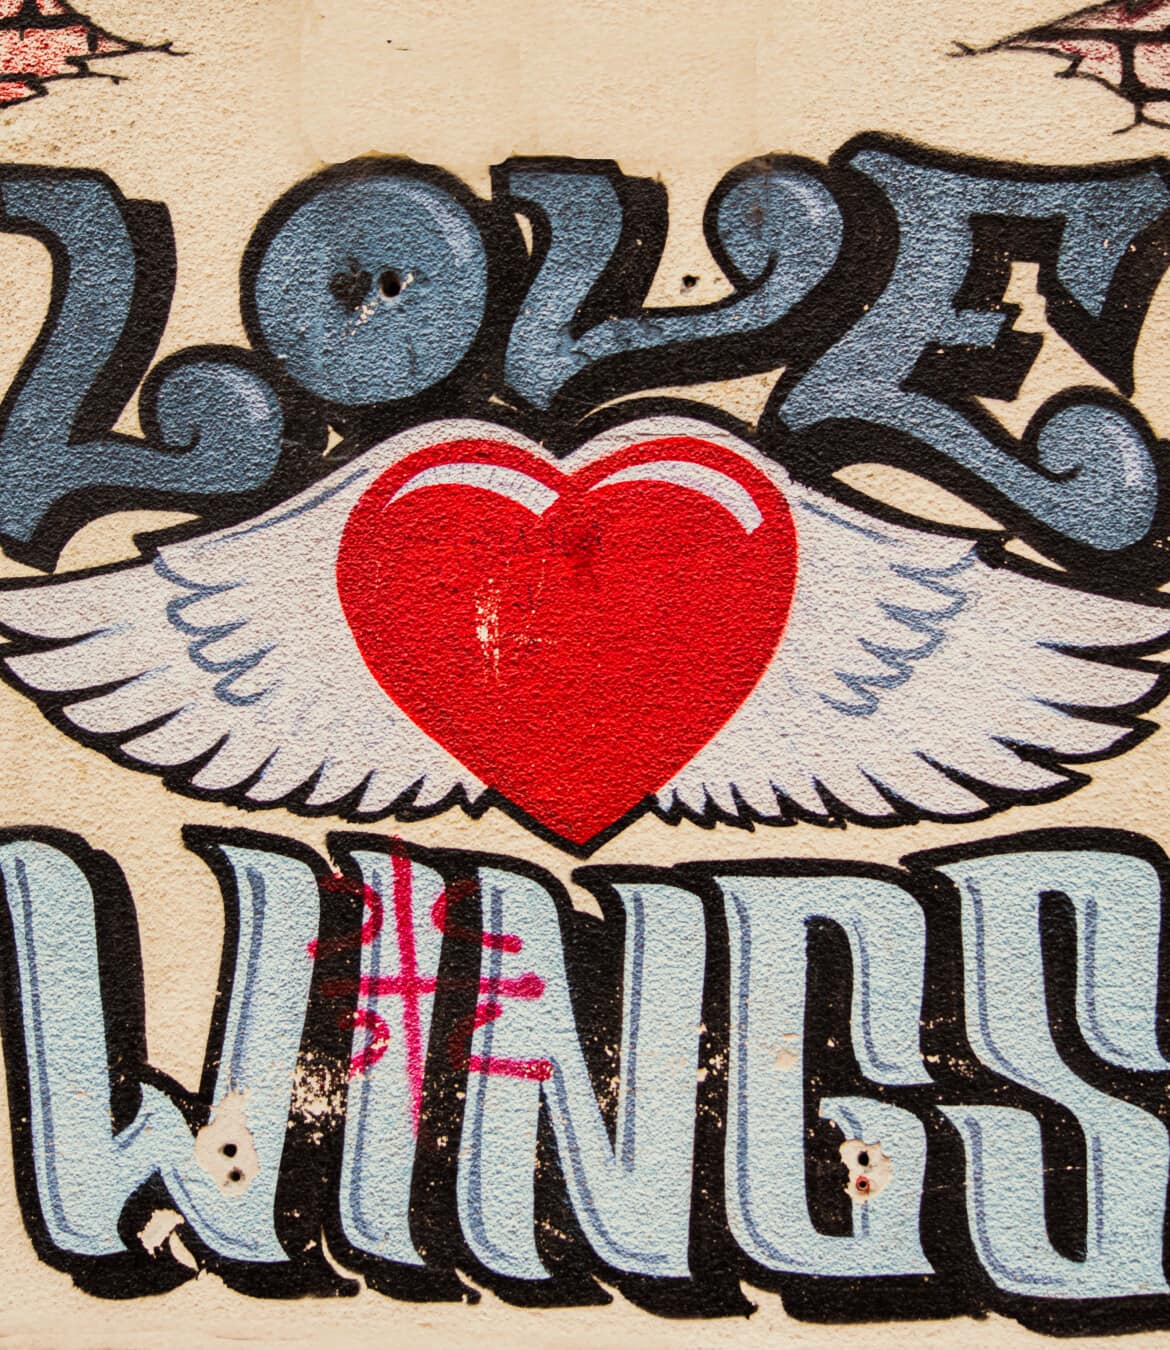 graffiti, love, text, message, romantic, wings, heart, angel, decoration, design